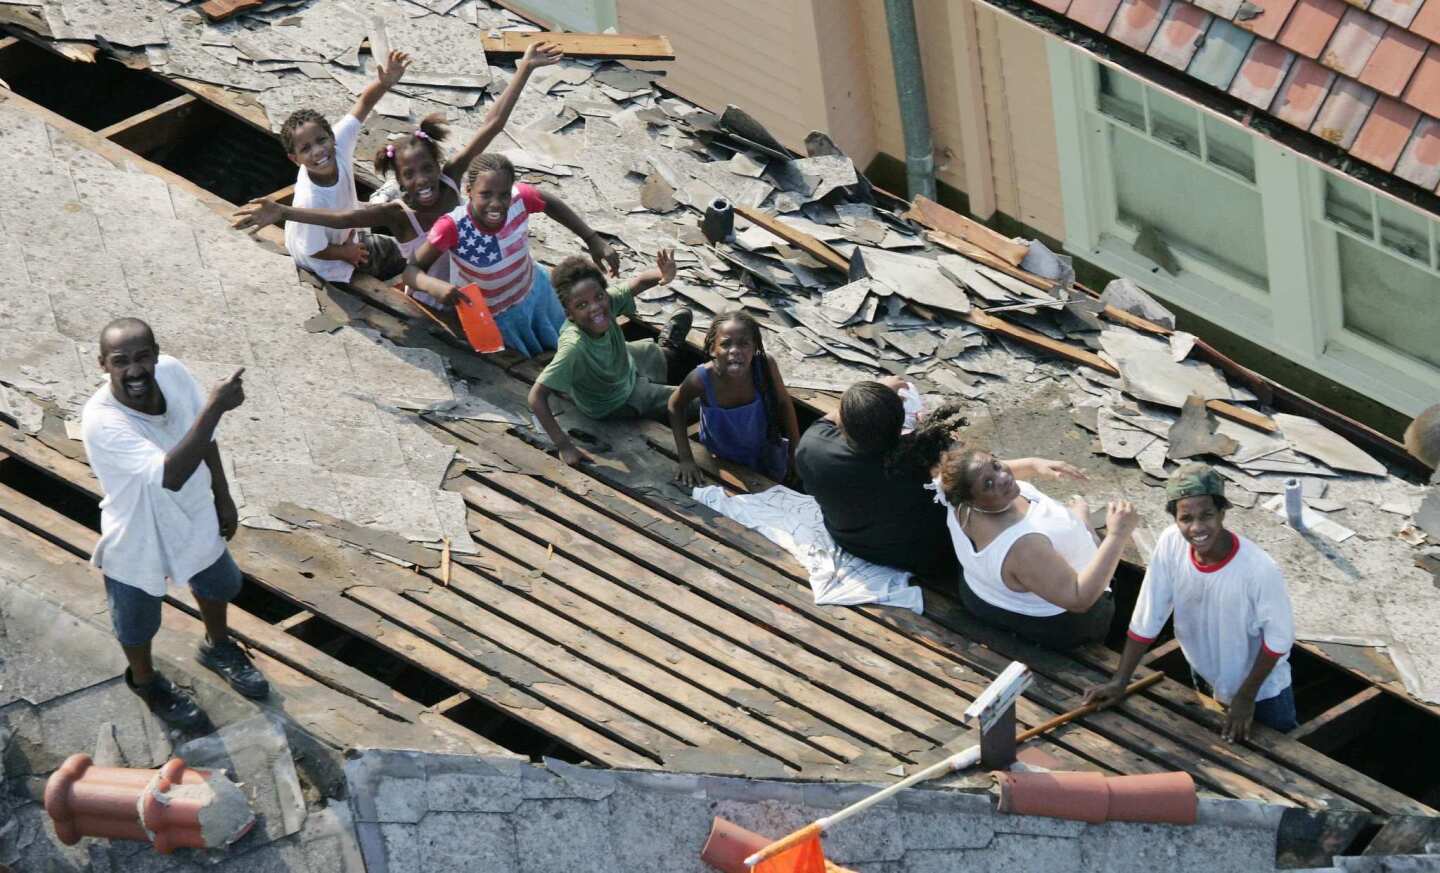 Unforgettable on TV: Hurricane Katrina aftermath